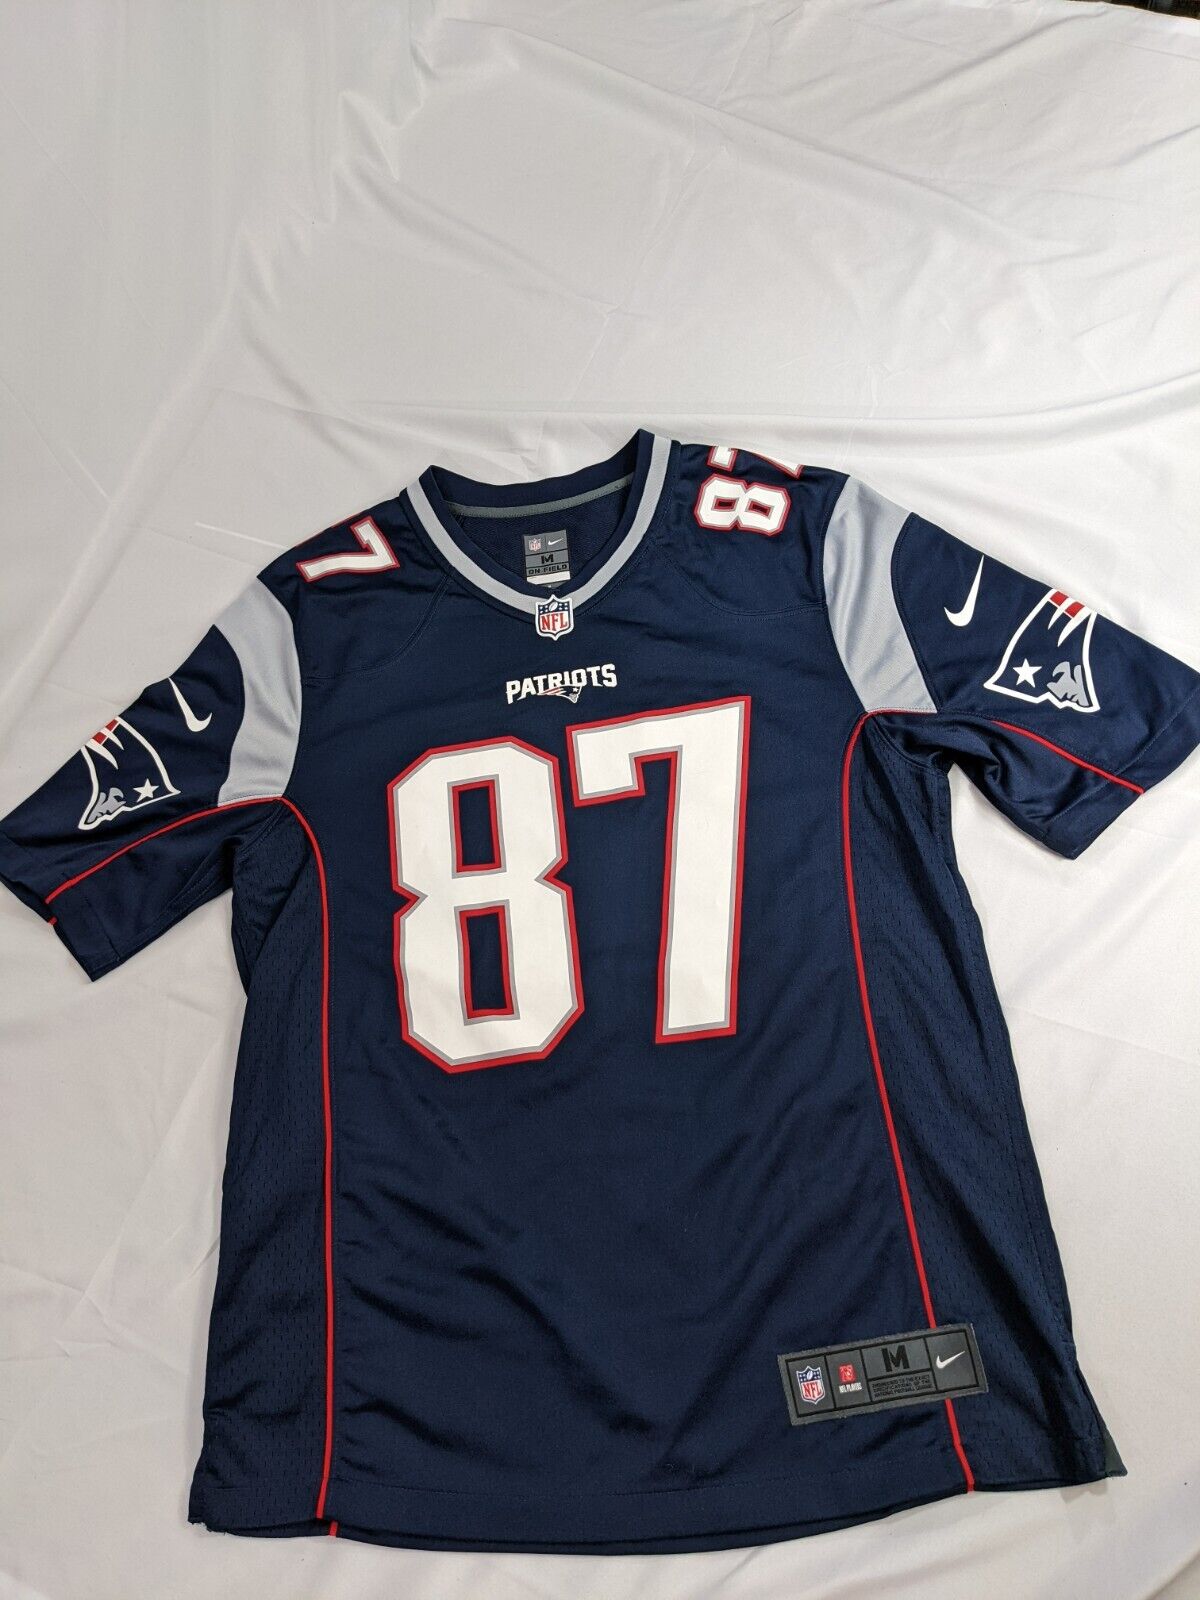 Nike NFL On Field New England Patriots Jersey #87 Rob Gronkowski Size Medium